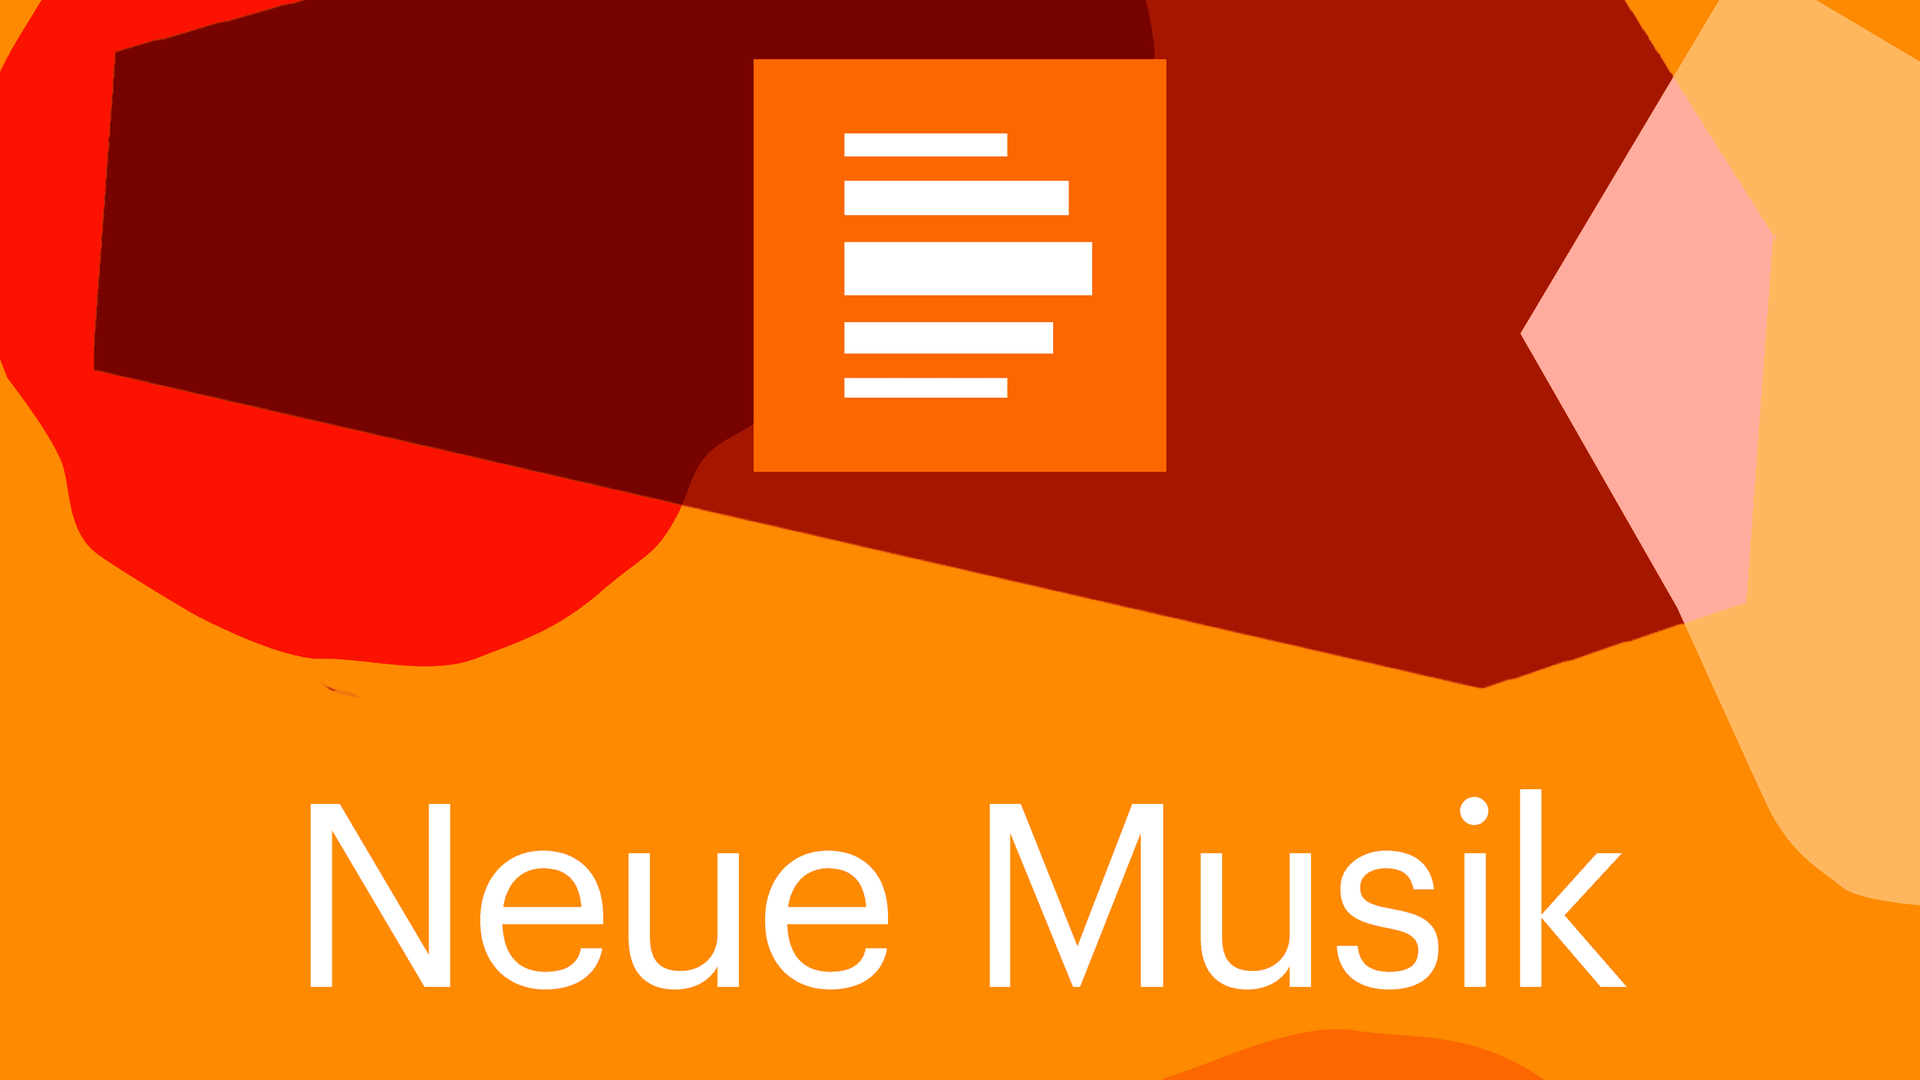 Podcast Audiothek Cover 2022 Deutschlandfunk Kultur Neue Musik